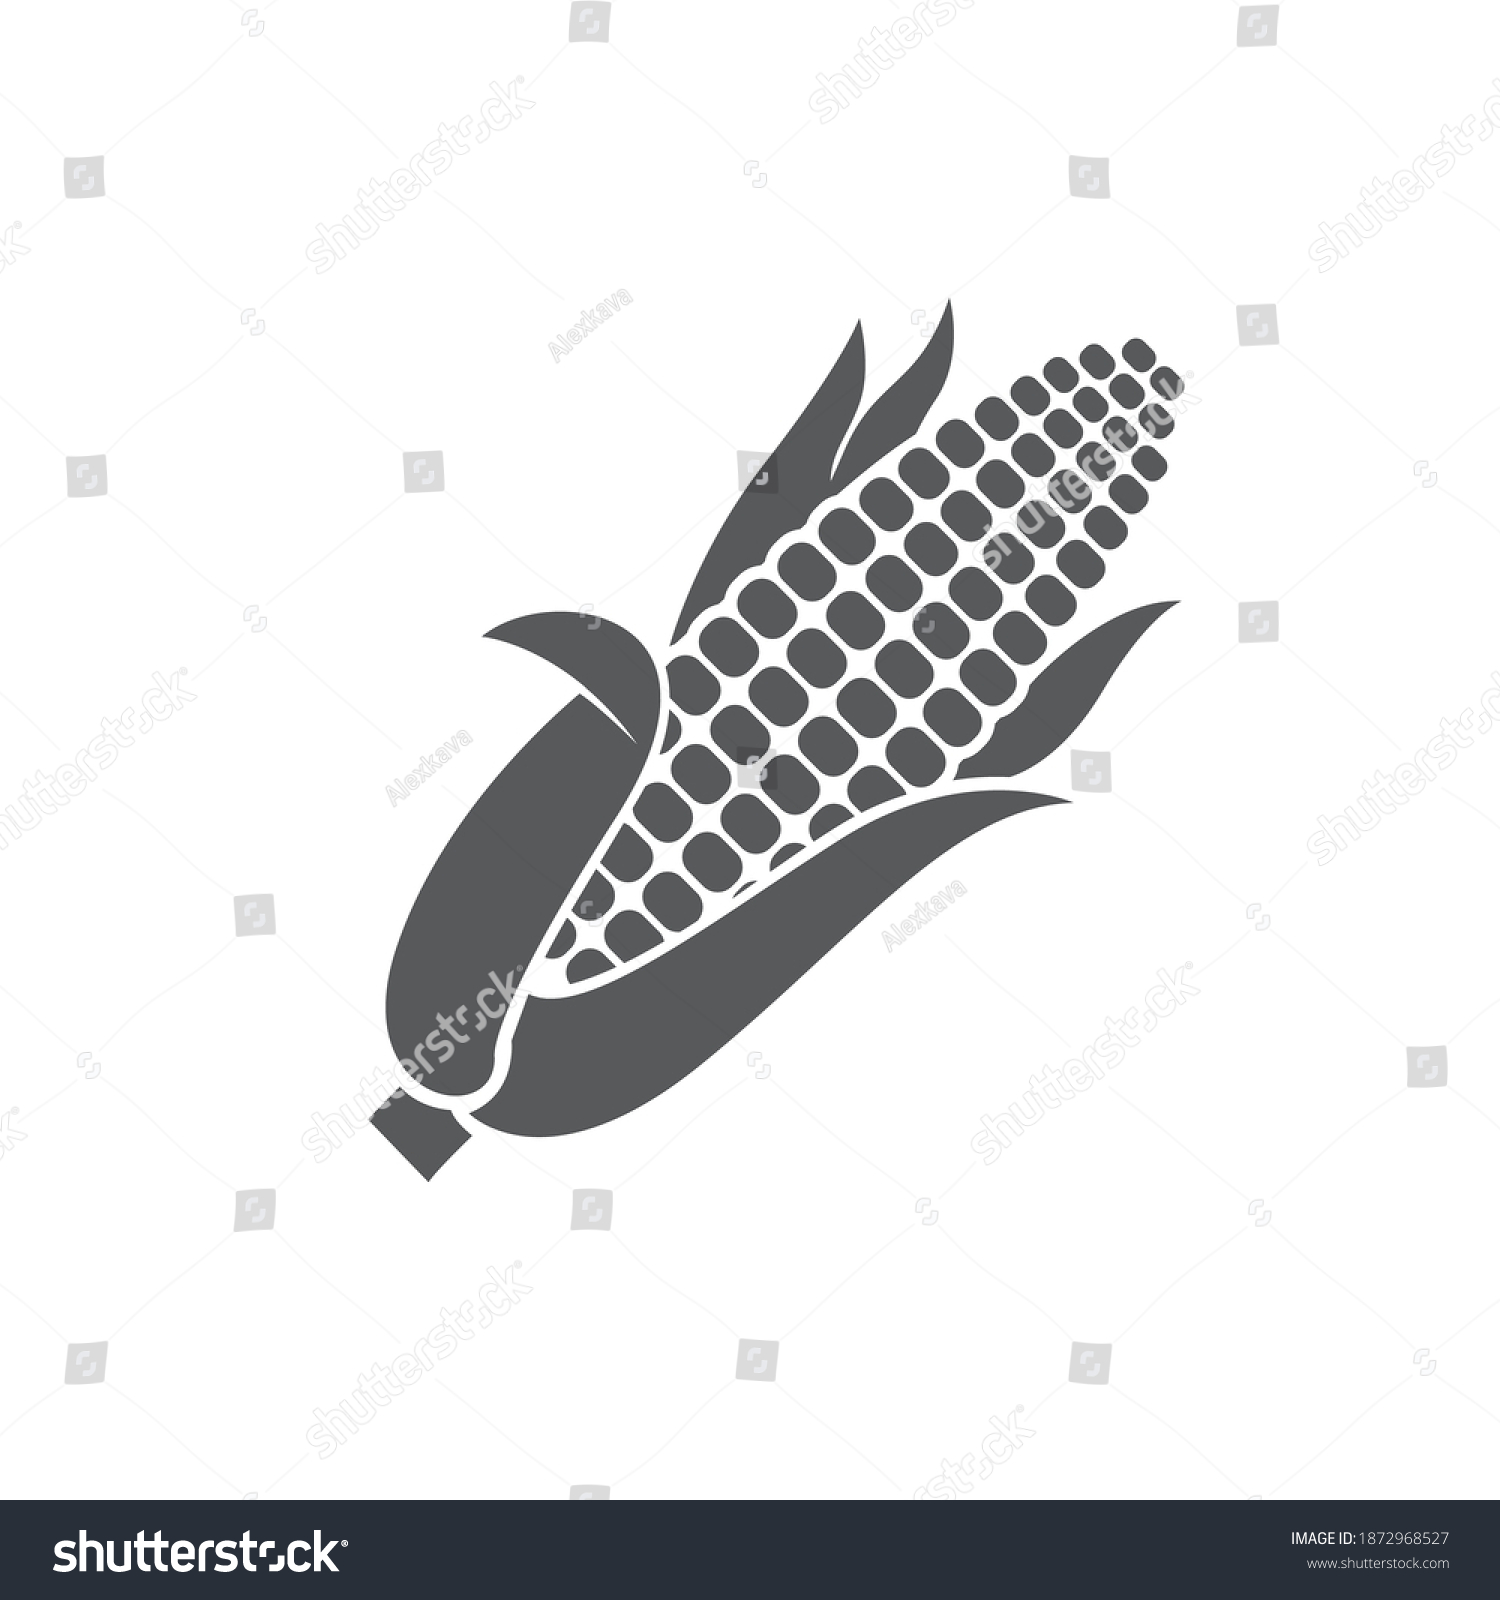 monochrome corncob icon isolated on white background #1872968527